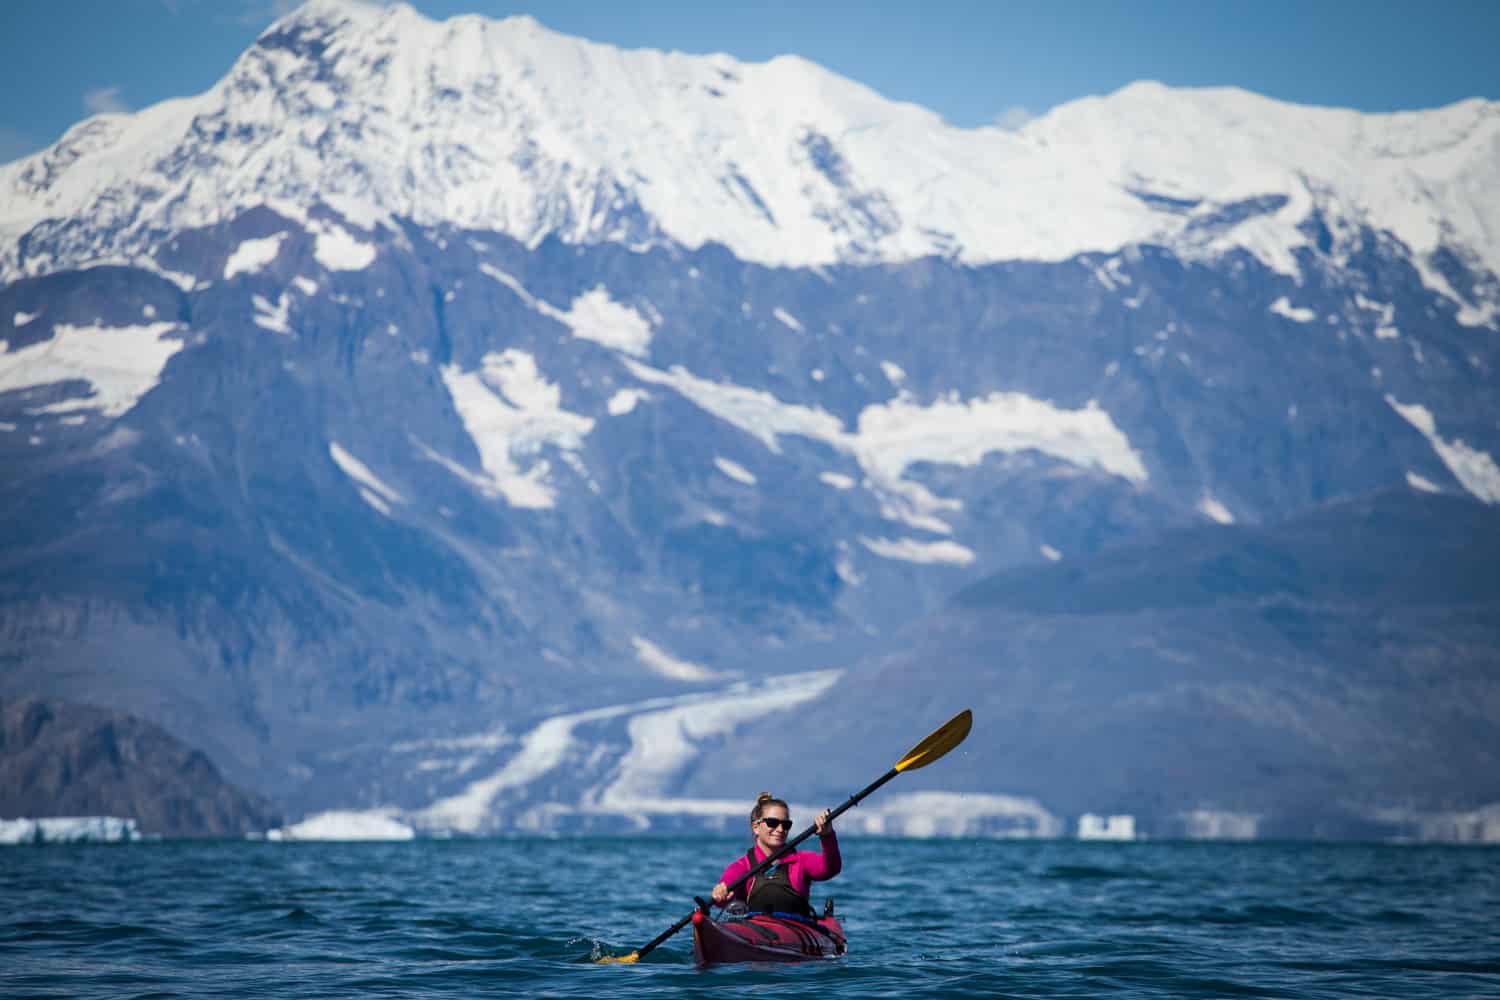 Laurel Winterbourne and Trevor Clark sea kayaking in Prince William Sound around Columbia Glacier. Valdez, Alaska.